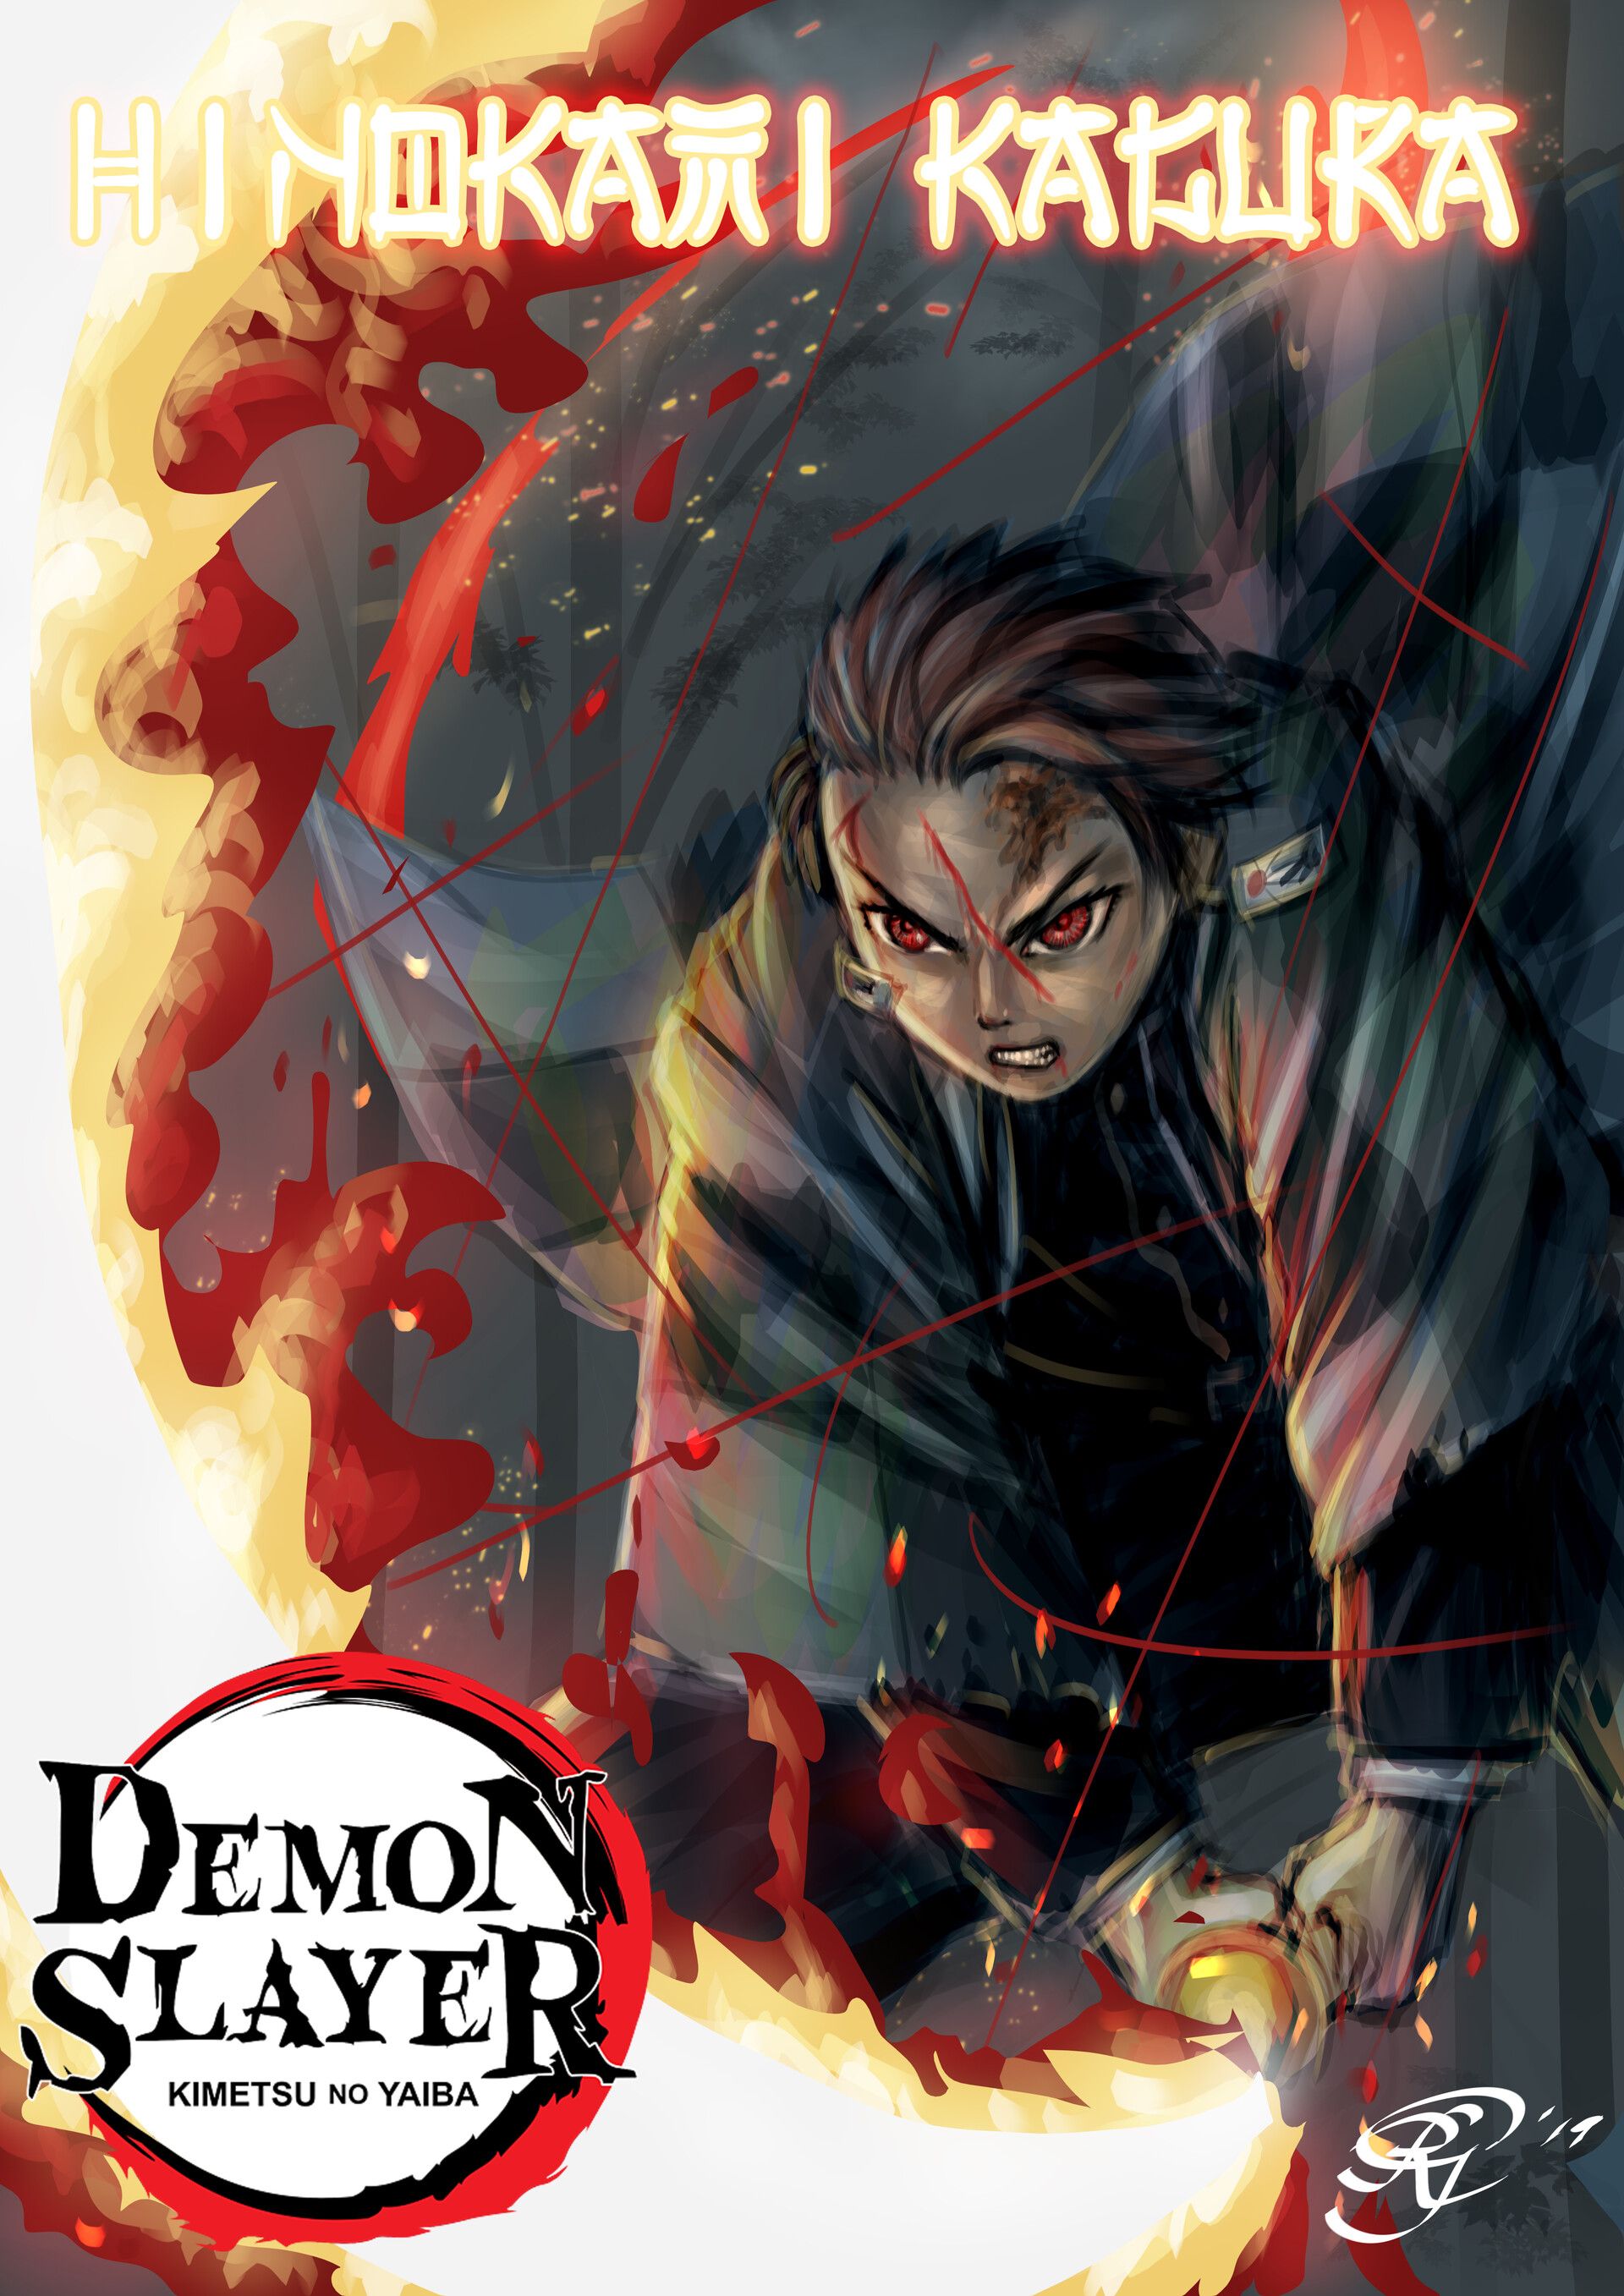 Hinokami Kagura Demon Slayer Fan Art, Romeo Gonzales